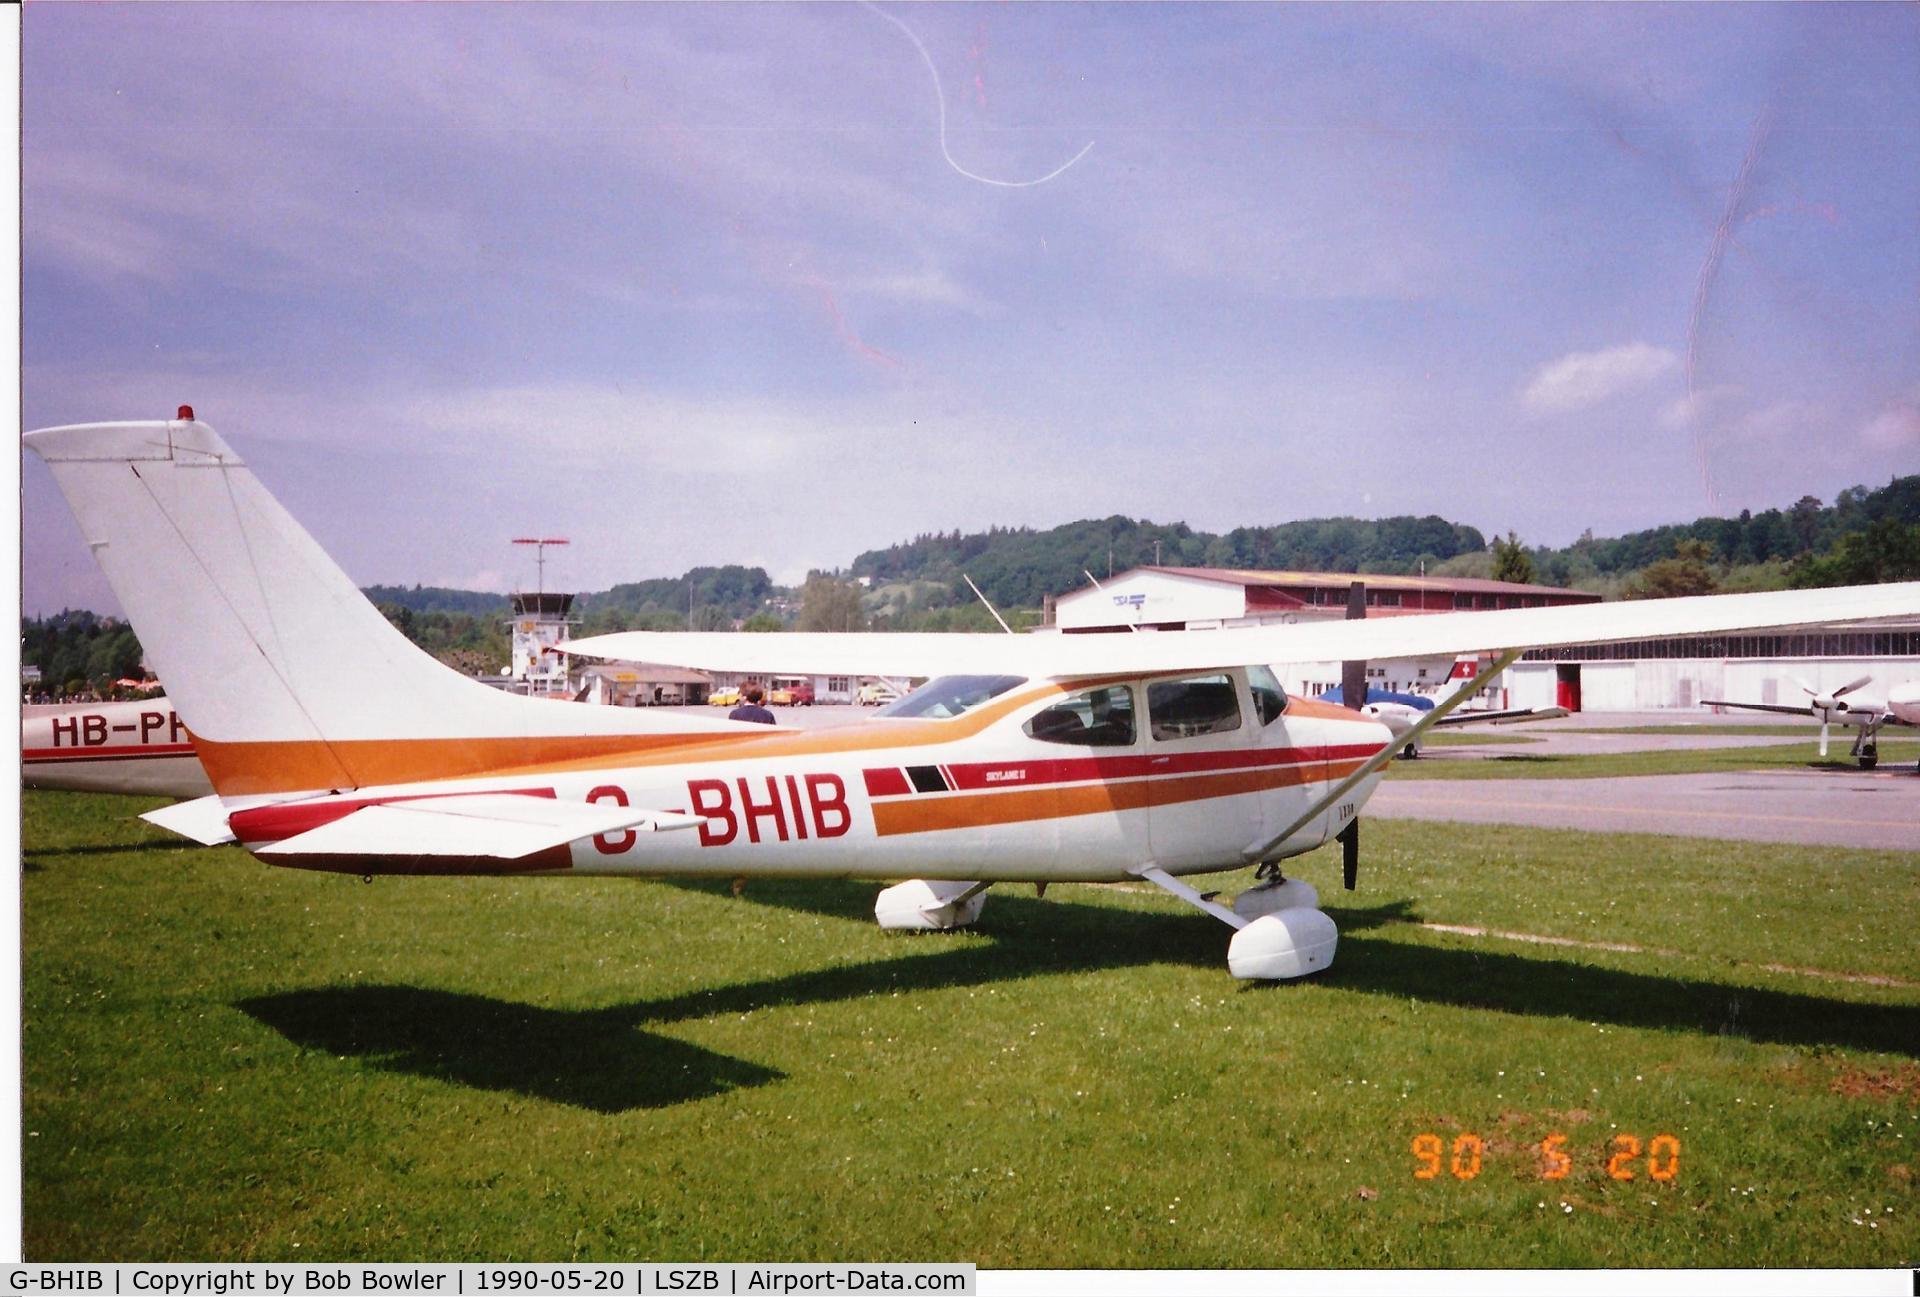 G-BHIB, 1980 Reims F182Q Skylane C/N 0134, Reims Cessna Skylane F182Q